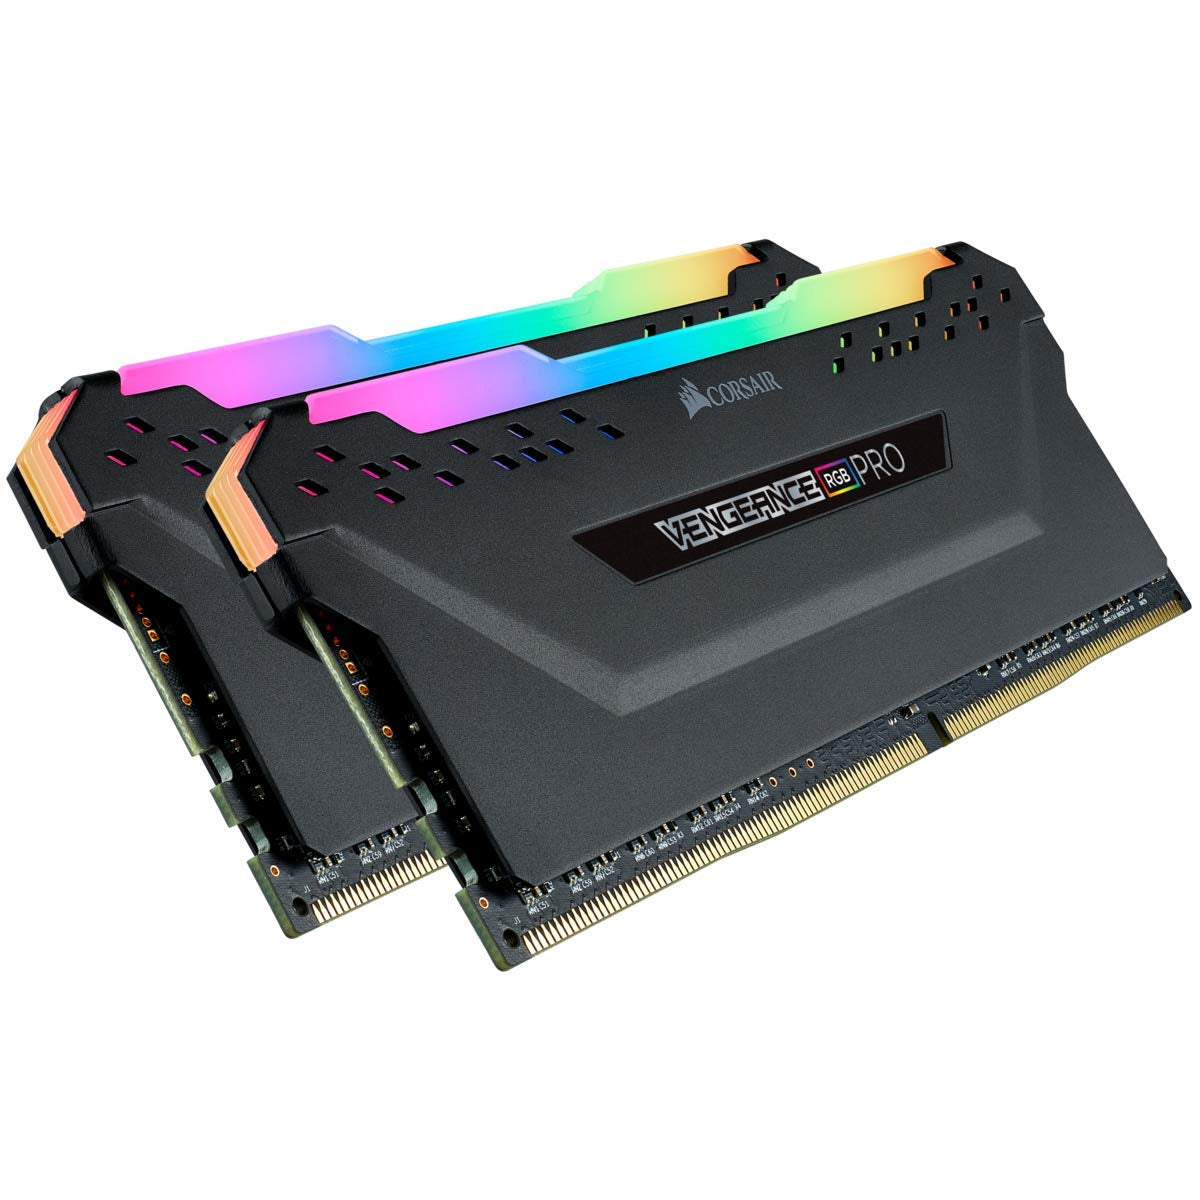 Corsair Vengeance RGB Pro RAM DDR4 3000MHz 288 Pin UDIMM Desktop Memory Kit